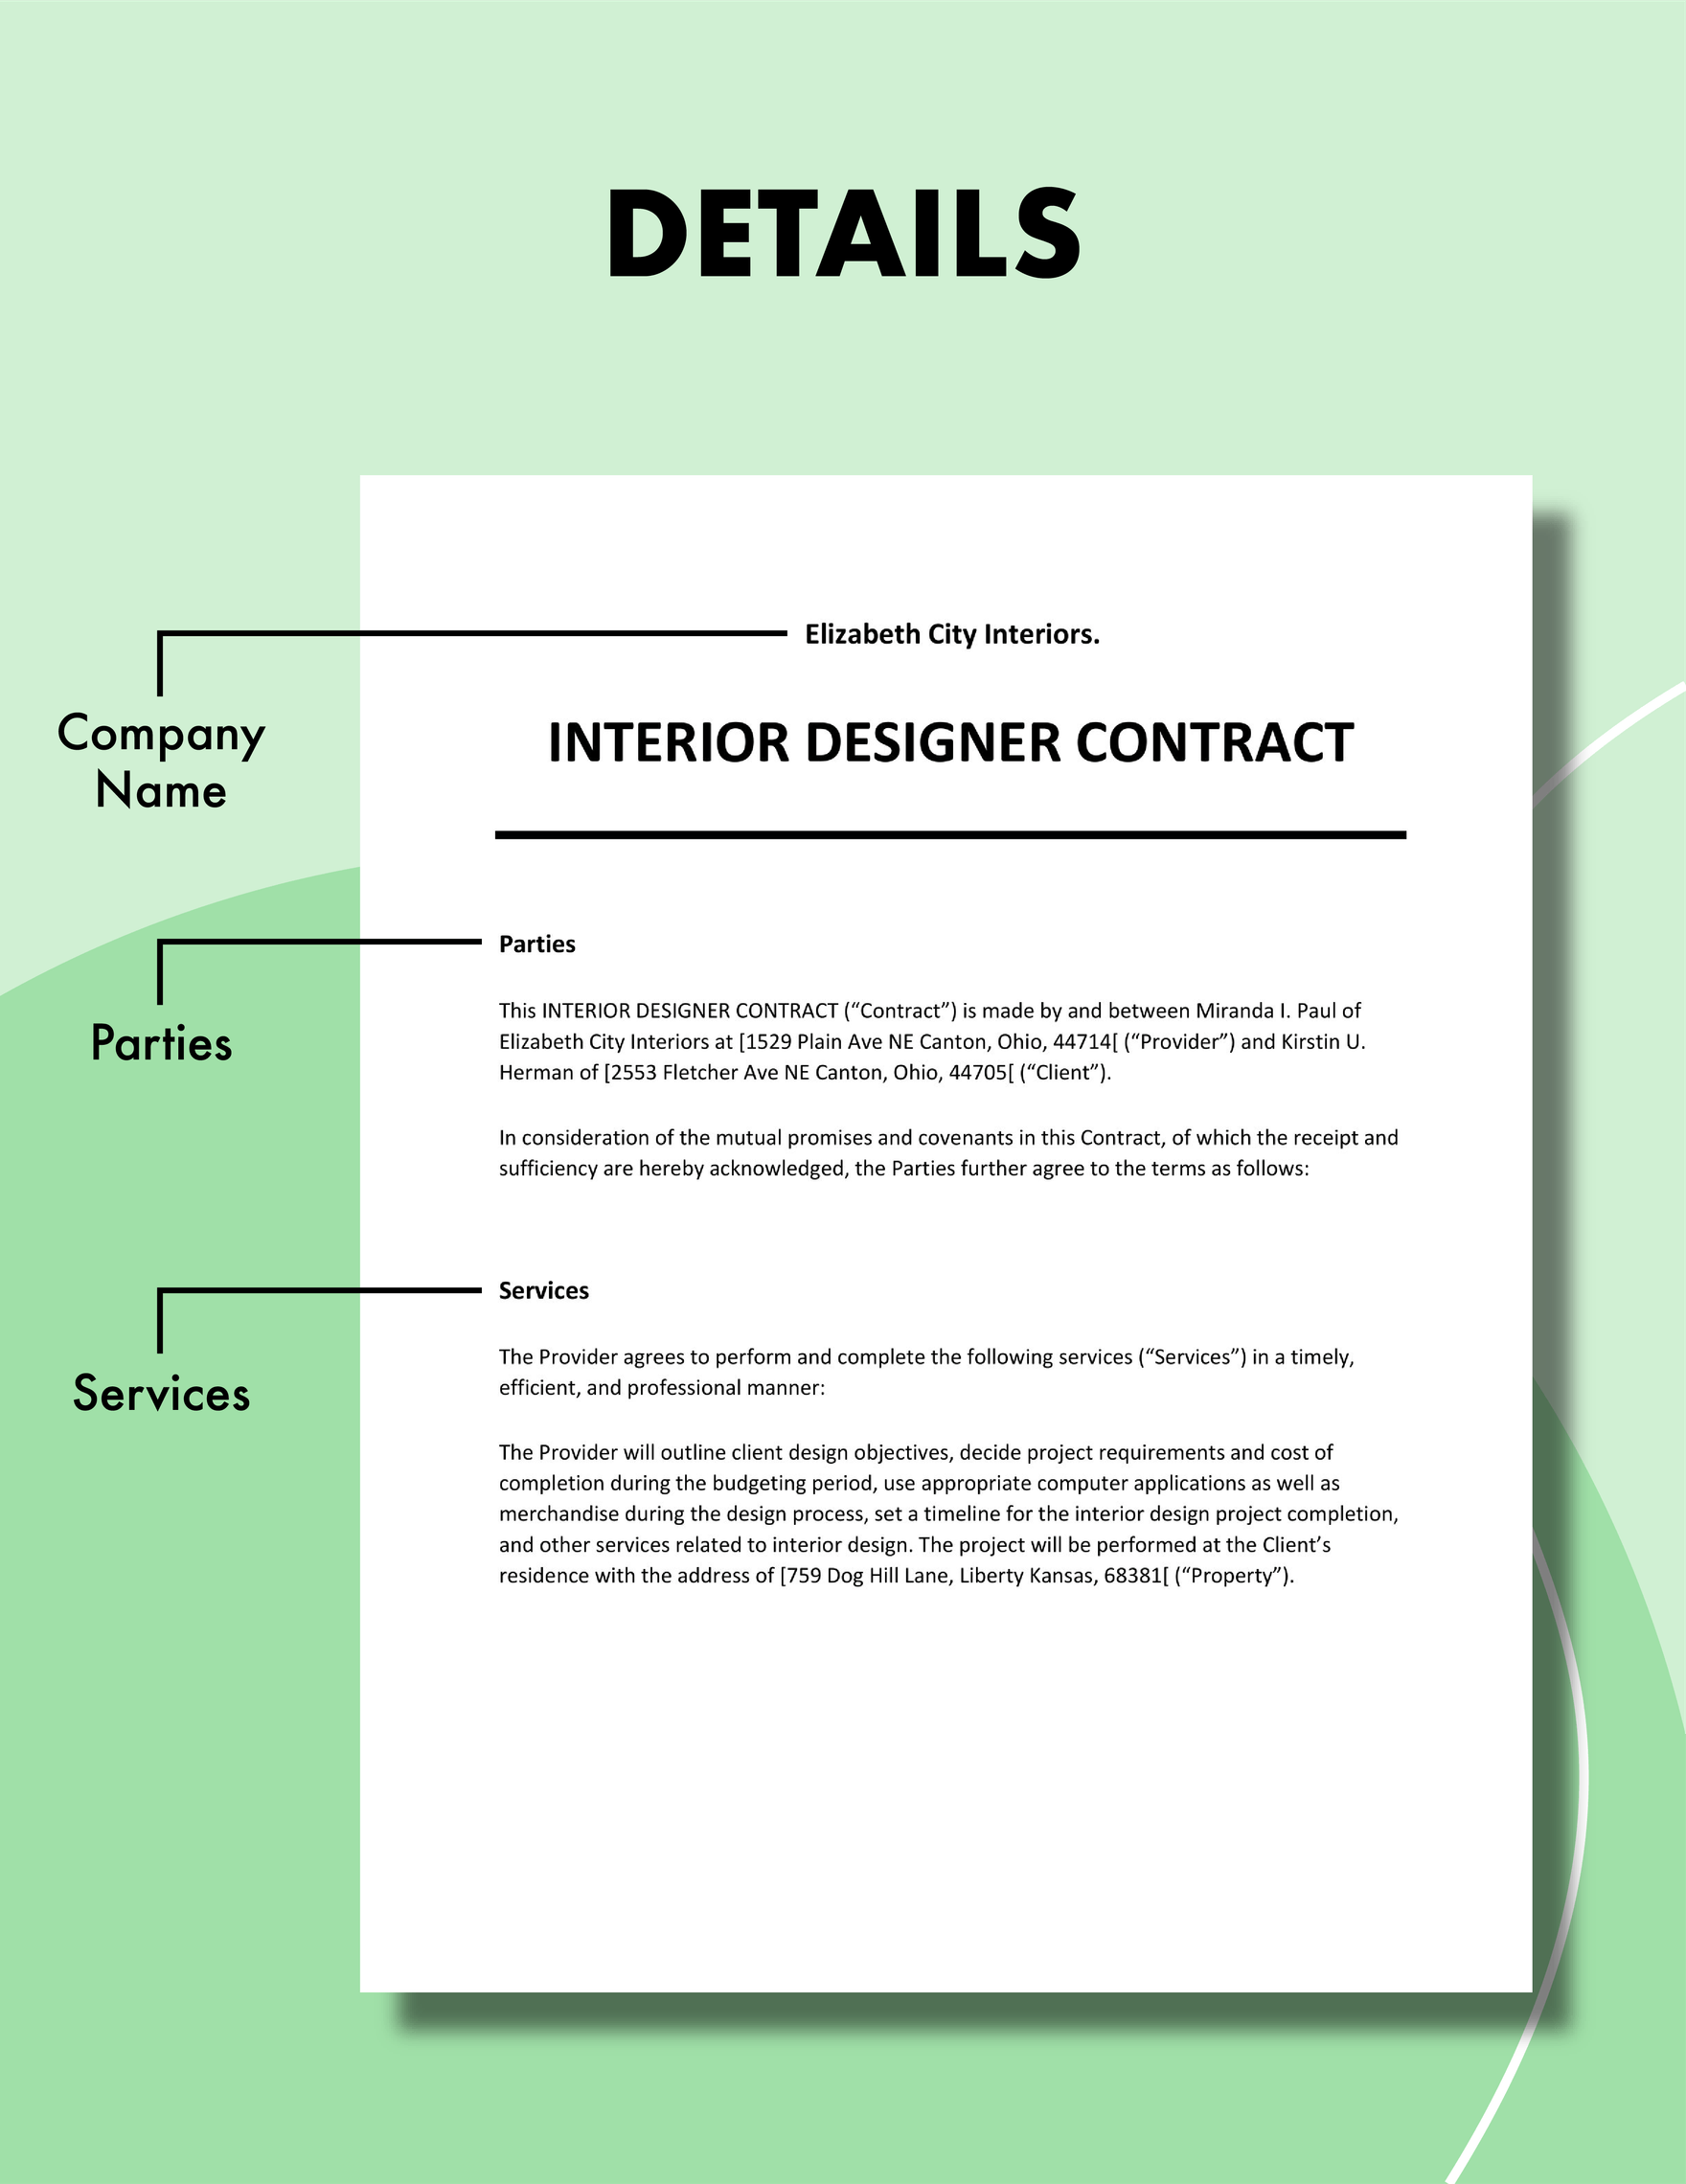 Interior Designer Contract Template